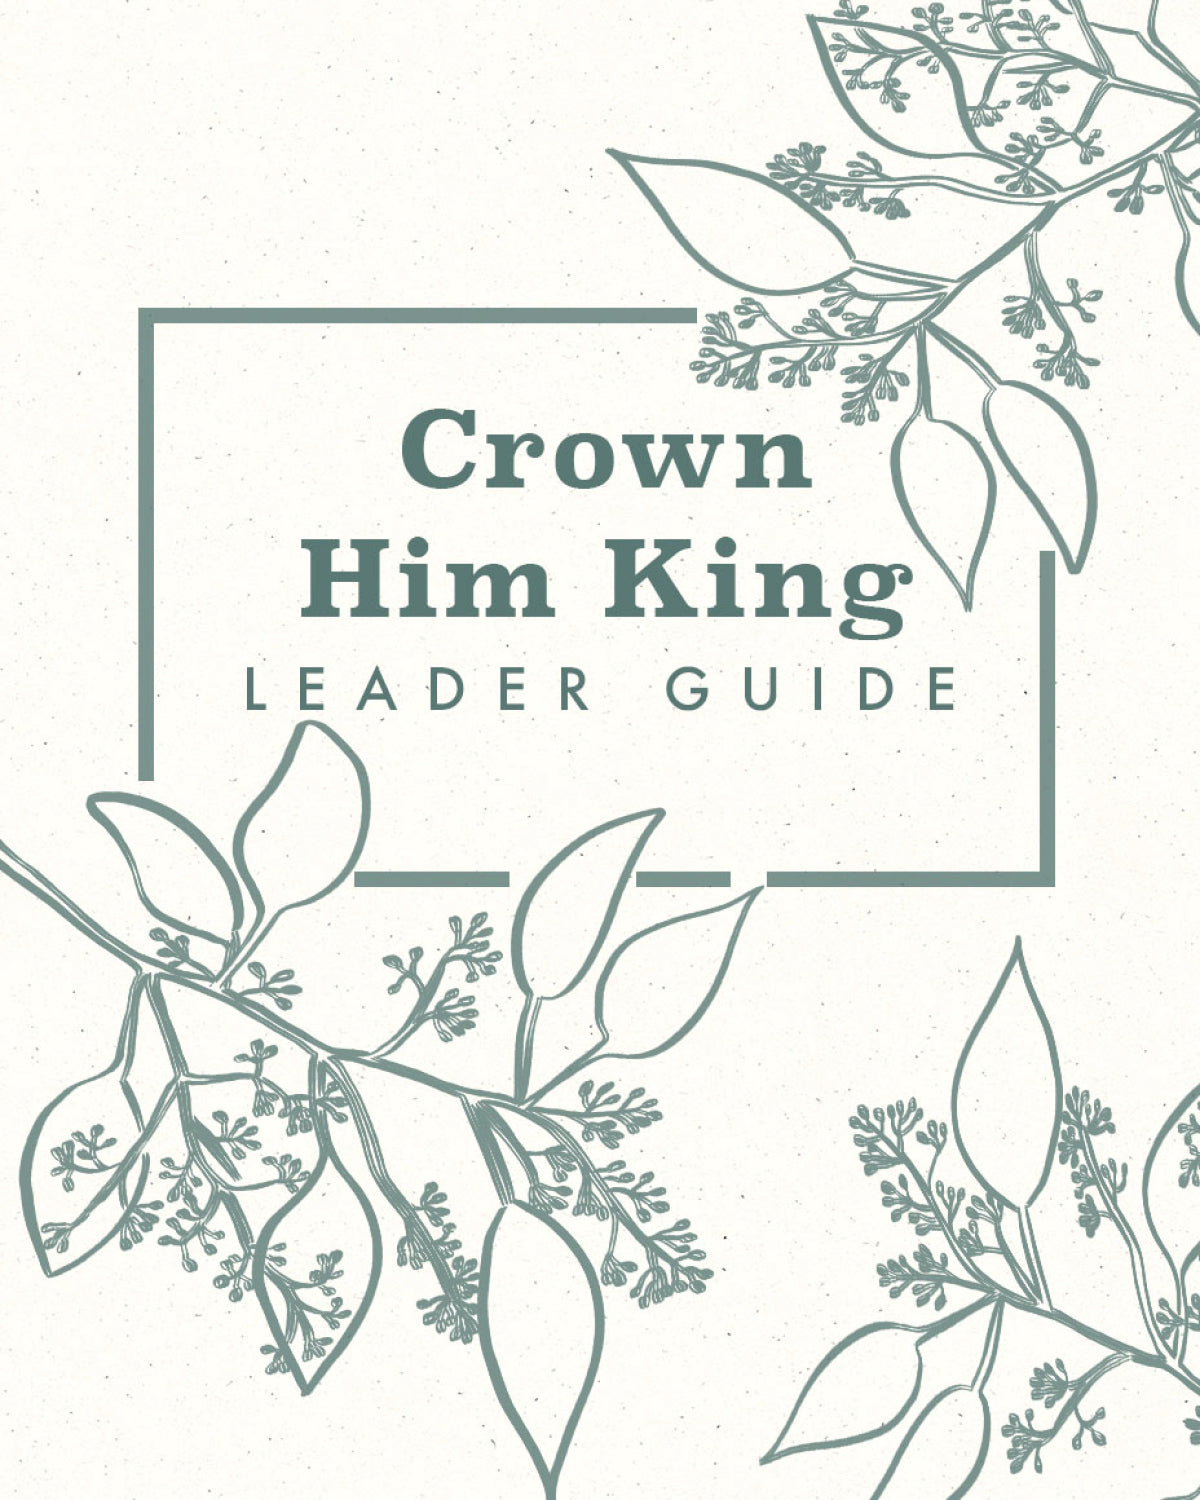 Crown Him King Leader Guide [FREE PDF]